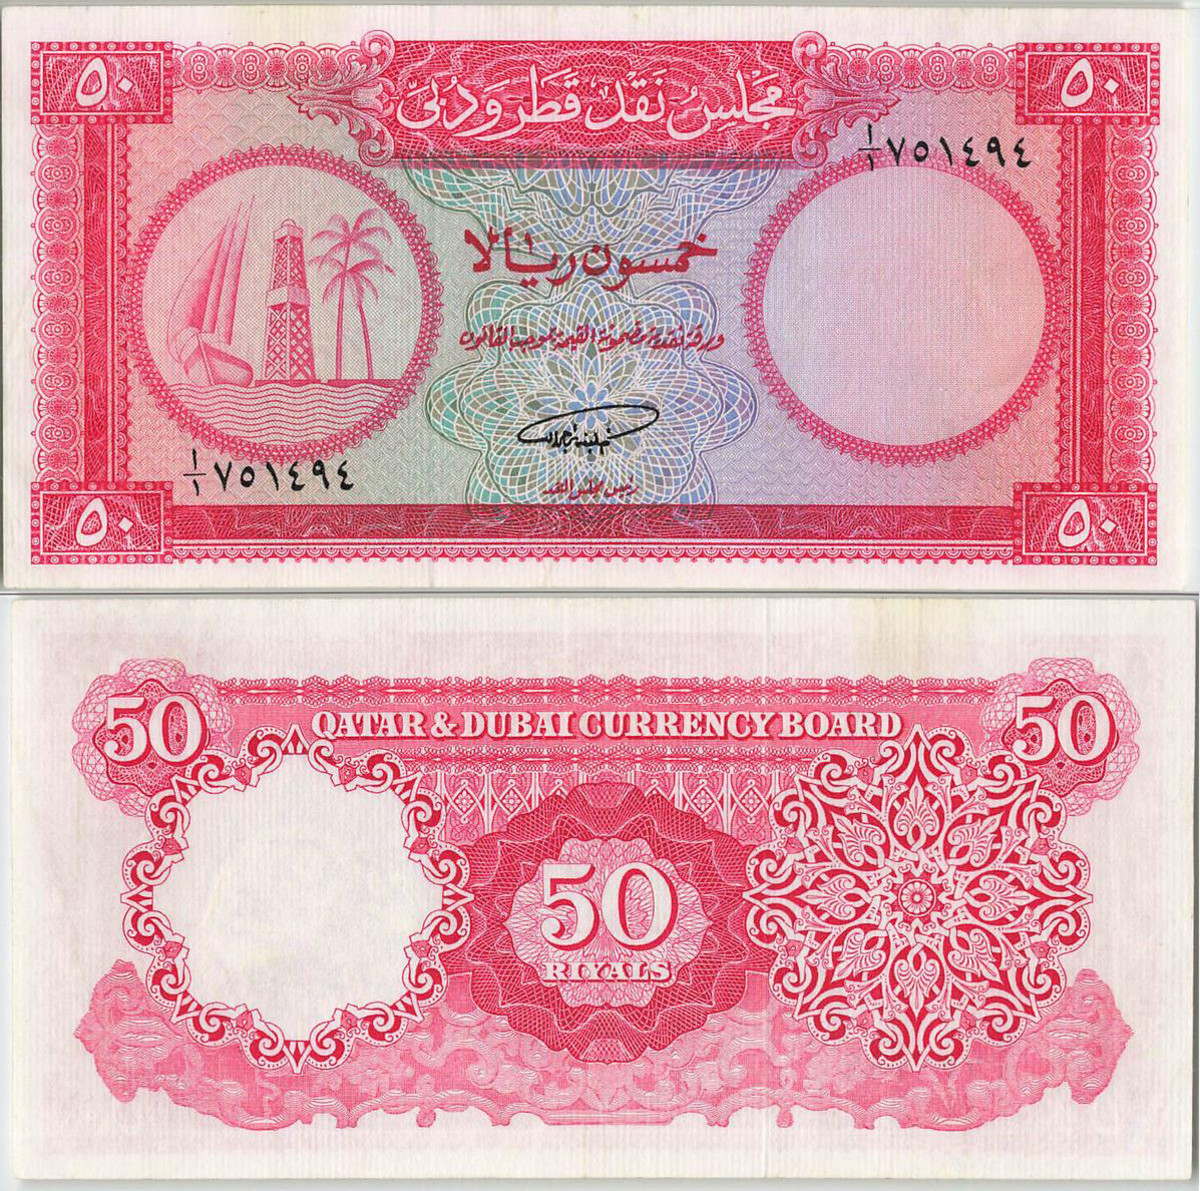 Qatar & Dubai ND (1966) P-5a PMG Choice Very Fine 35 50 Riyals